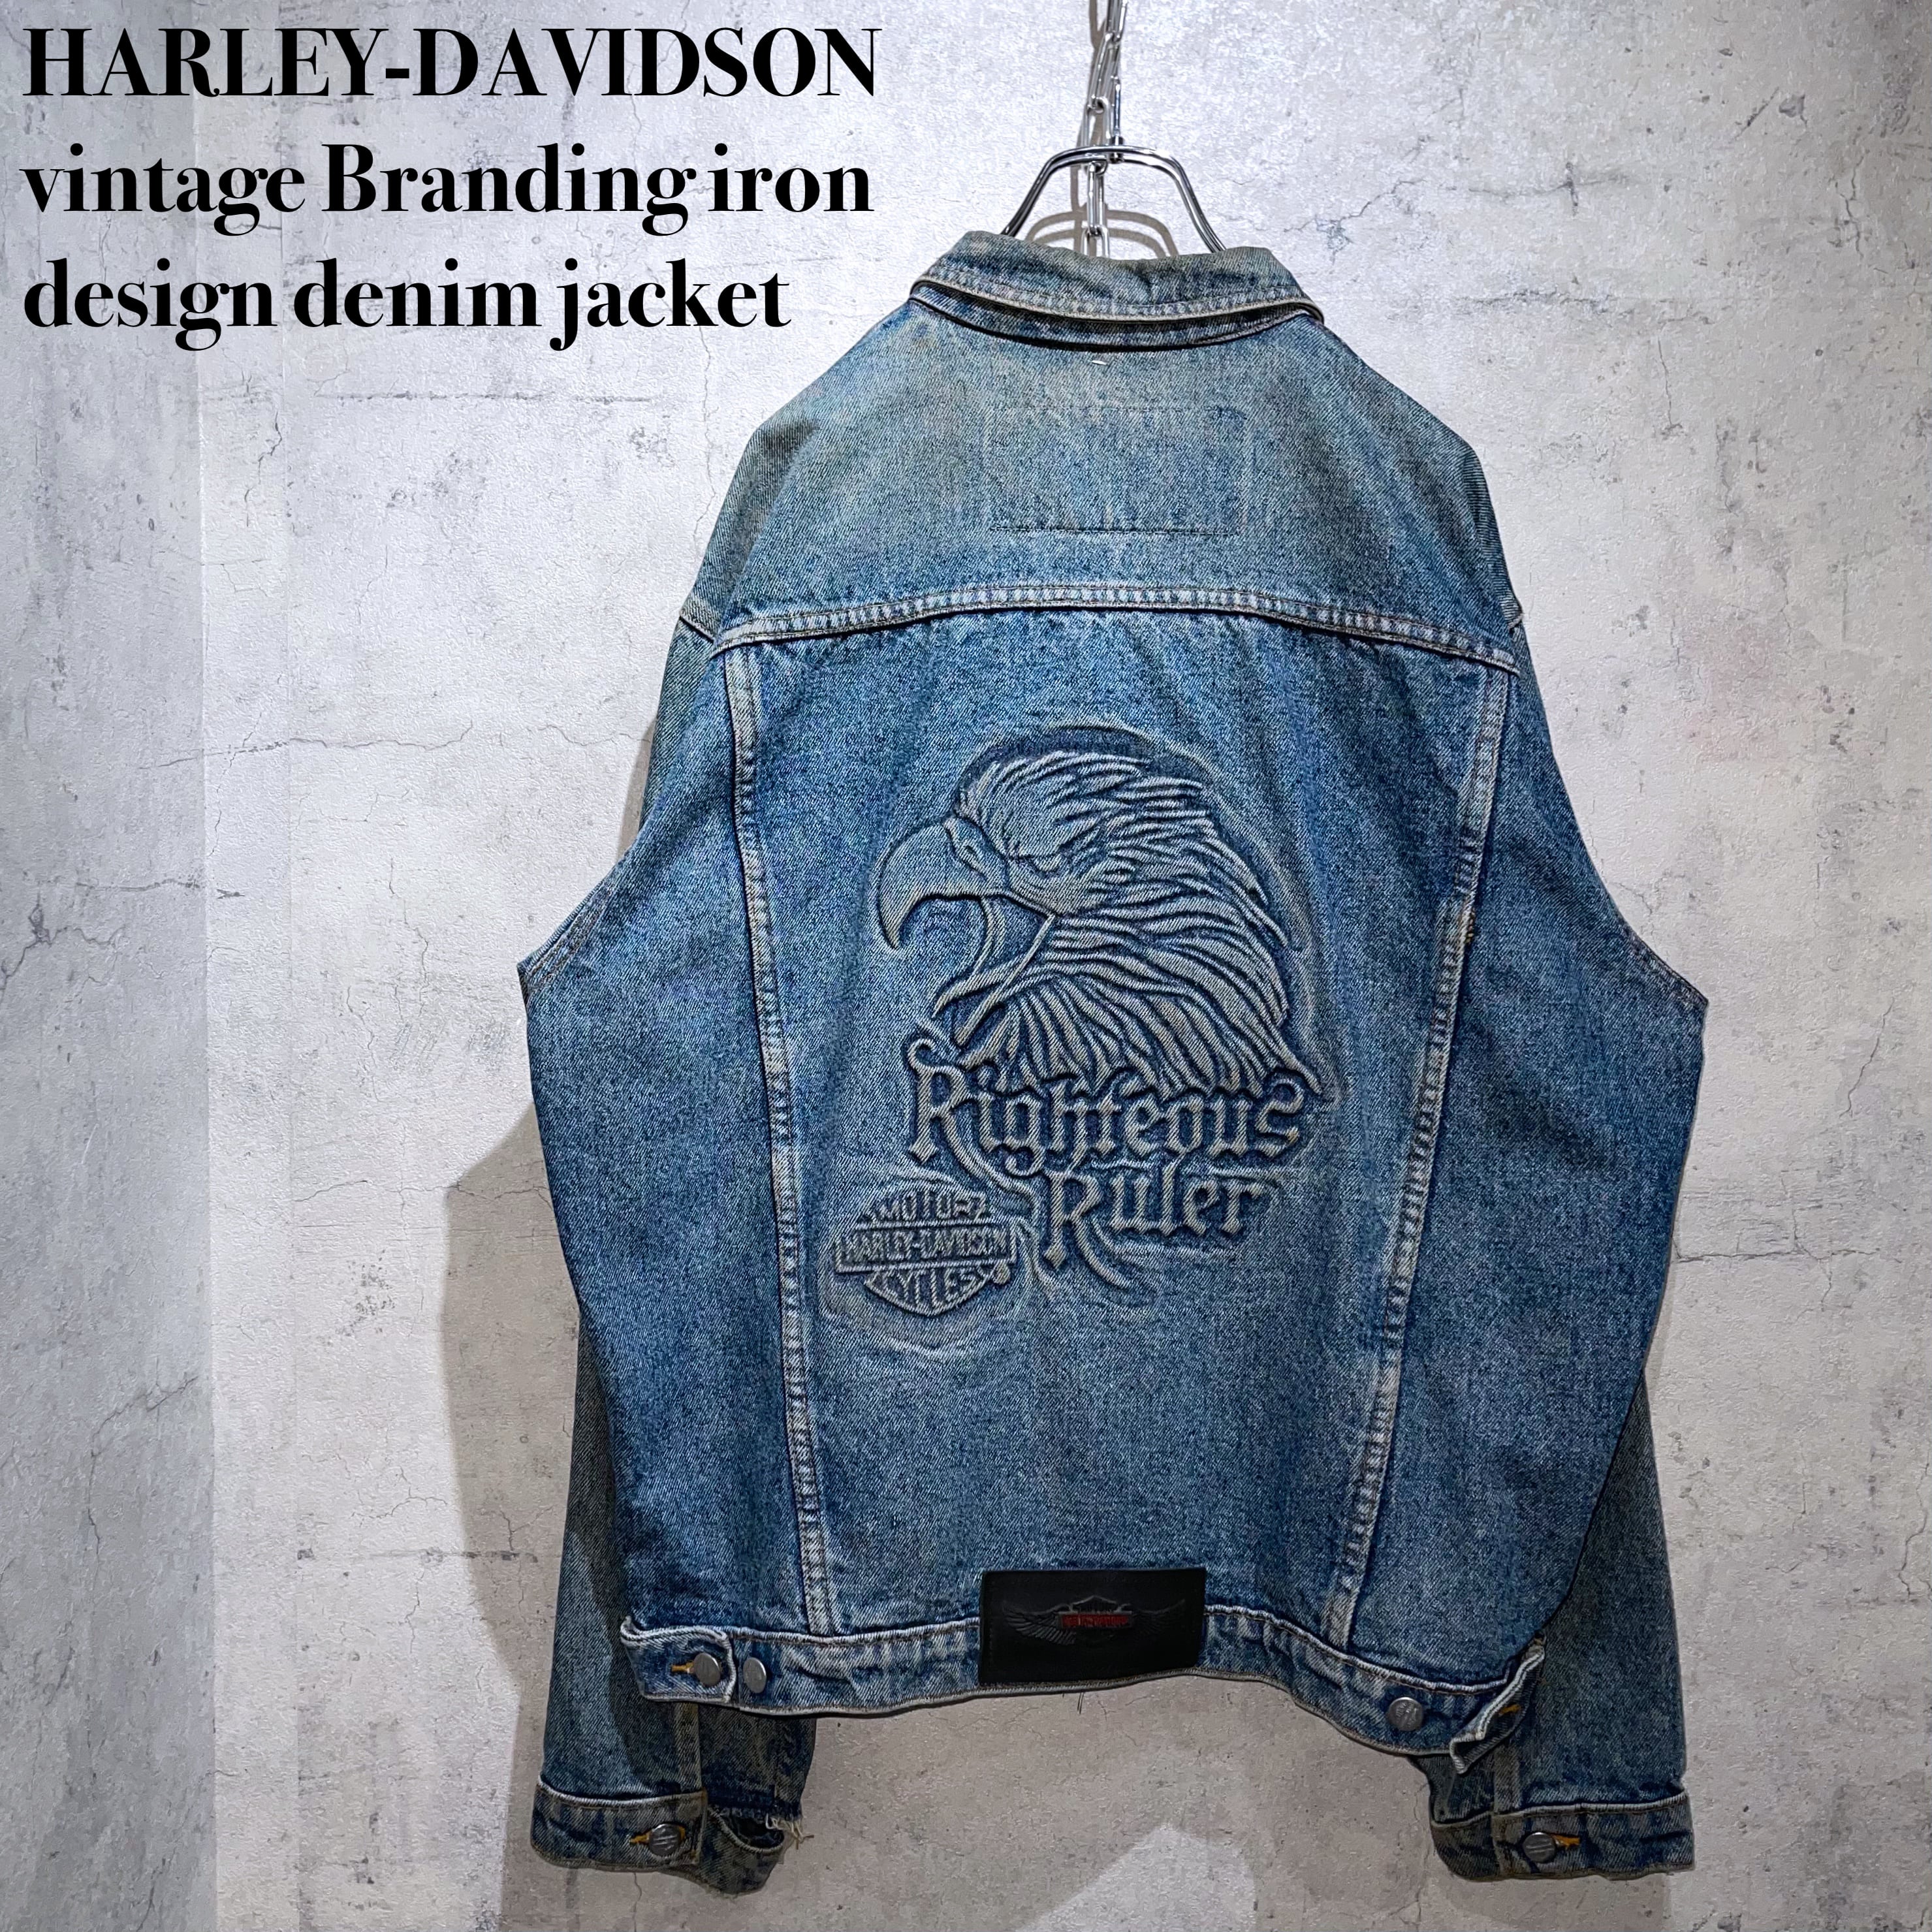 HARLEY-DAVIDSON vintage Branding iron design denim jacket | ayne